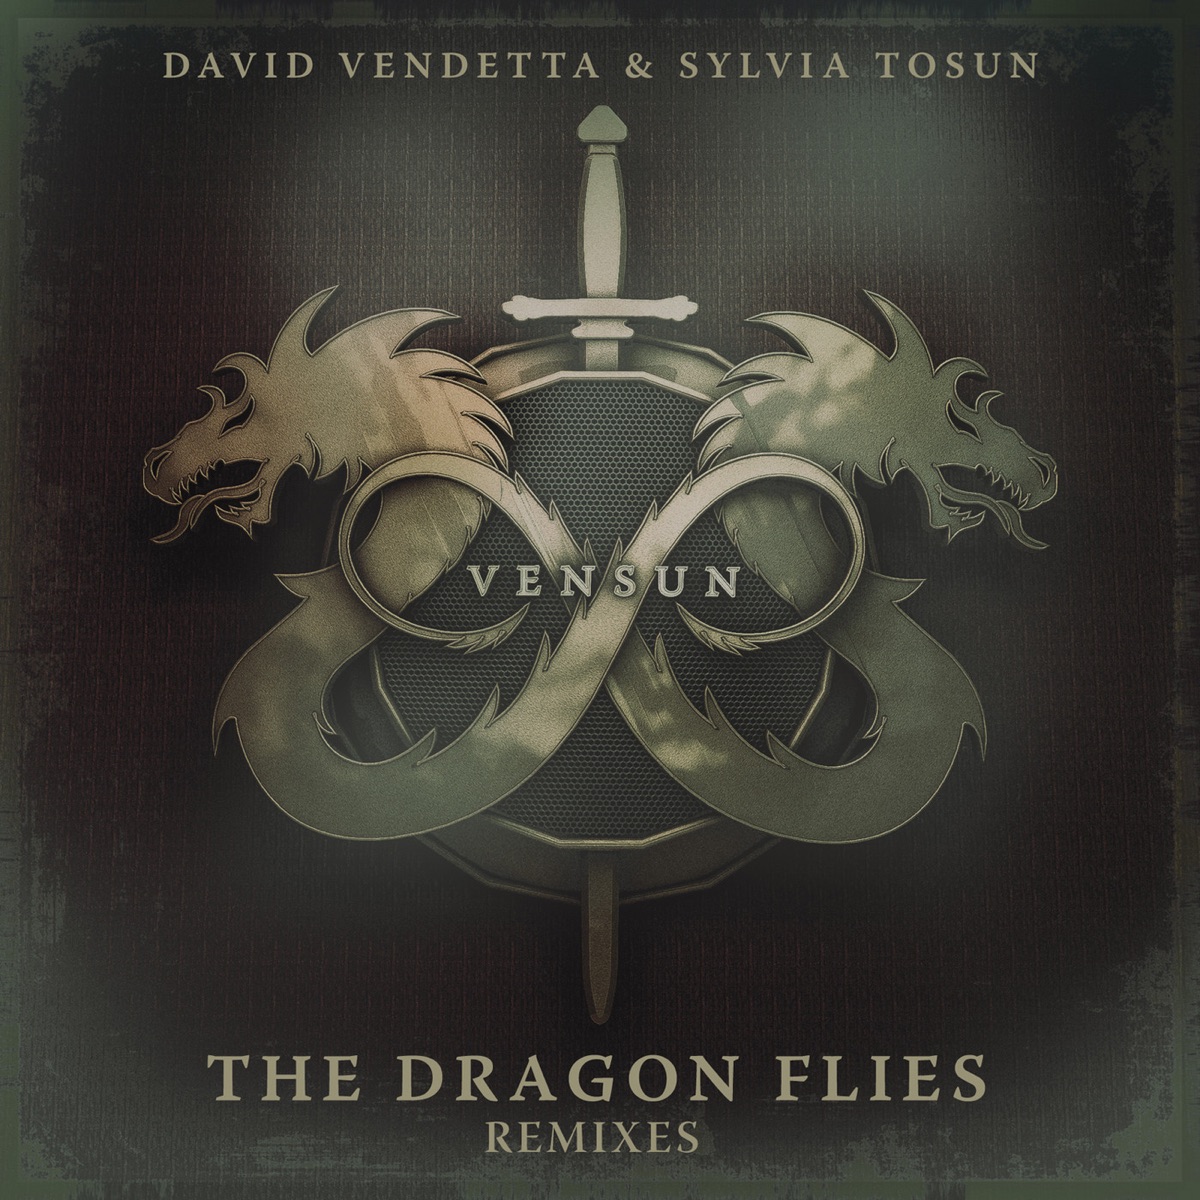 VenSun, David Vendetta, & Sylvia Tosun The Dragon Flies cover artwork